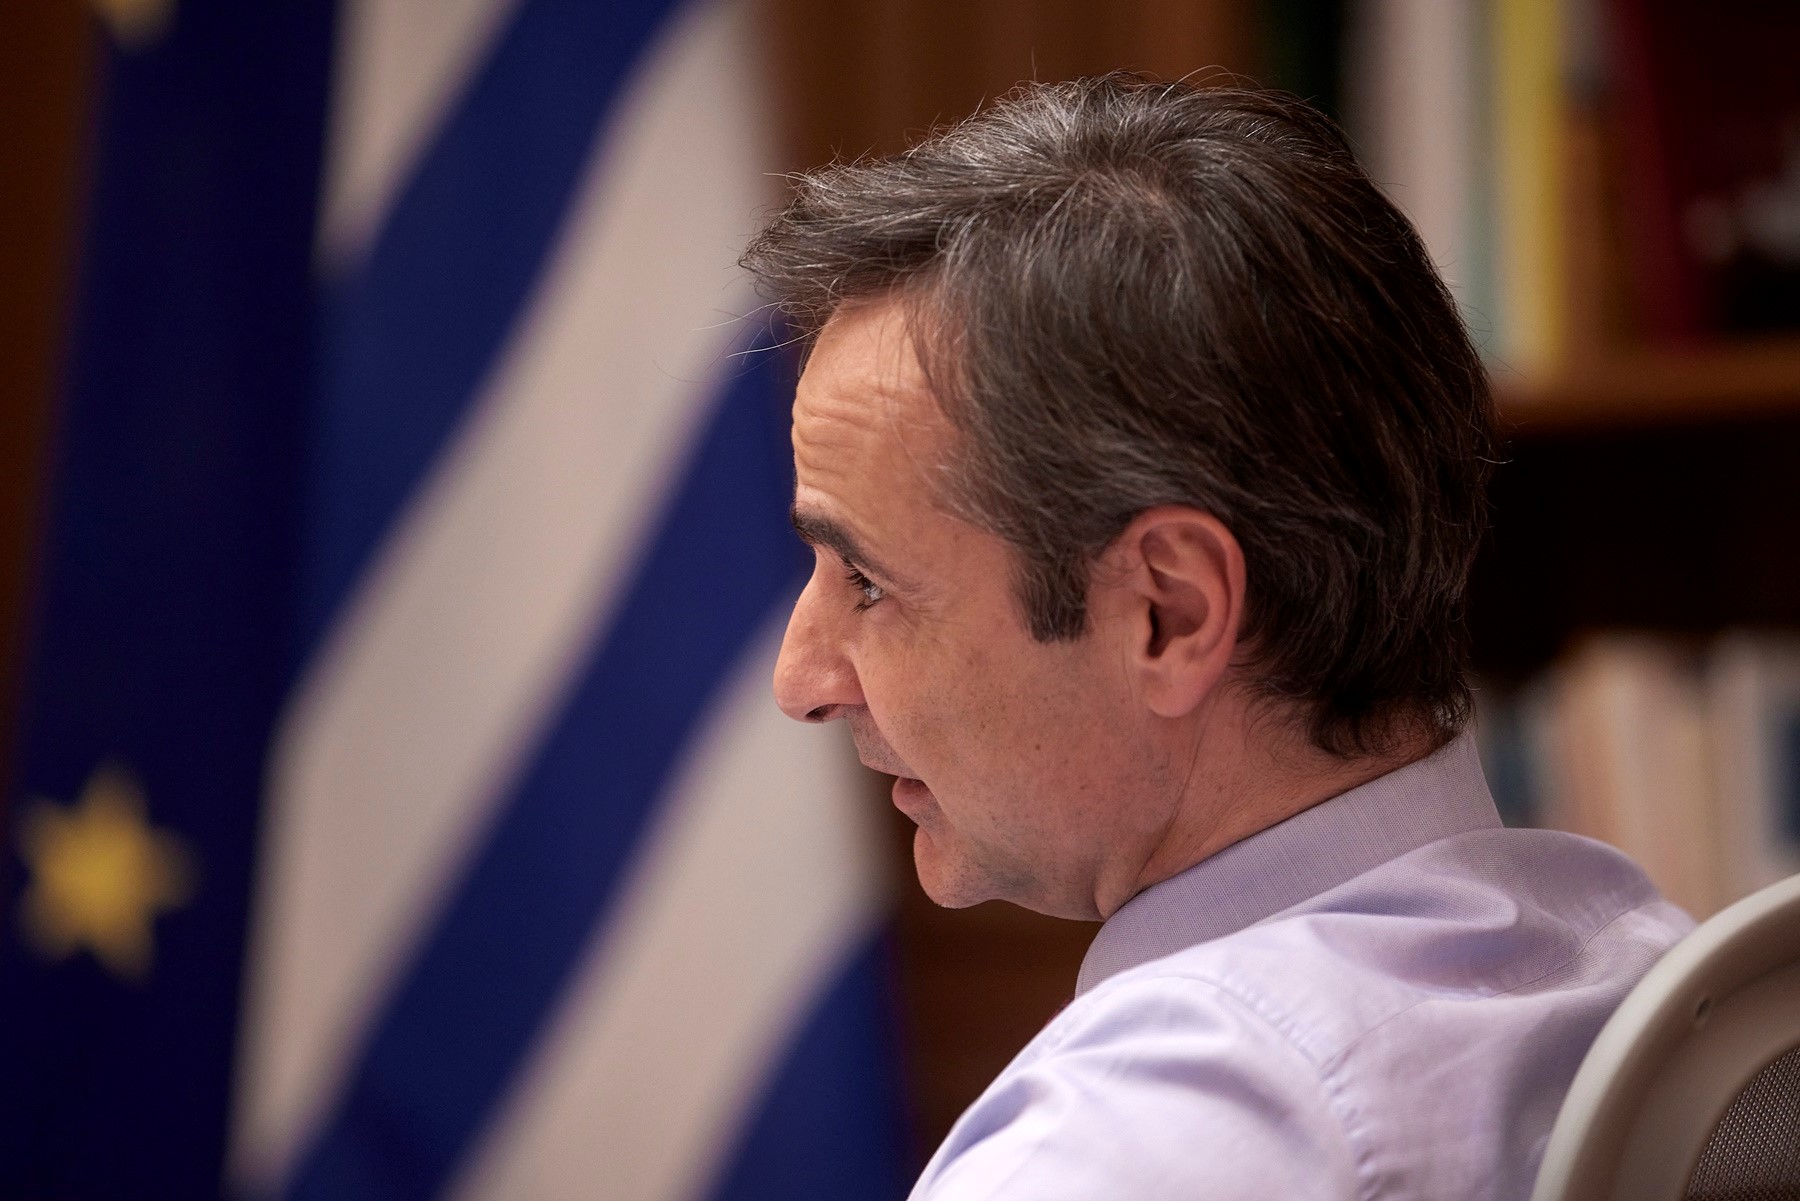 Lockdown στην Ελλάδα – Μητσοτάκης: Ο πρωθυπουργός βάζει ξανά τέλος στα σενάρια